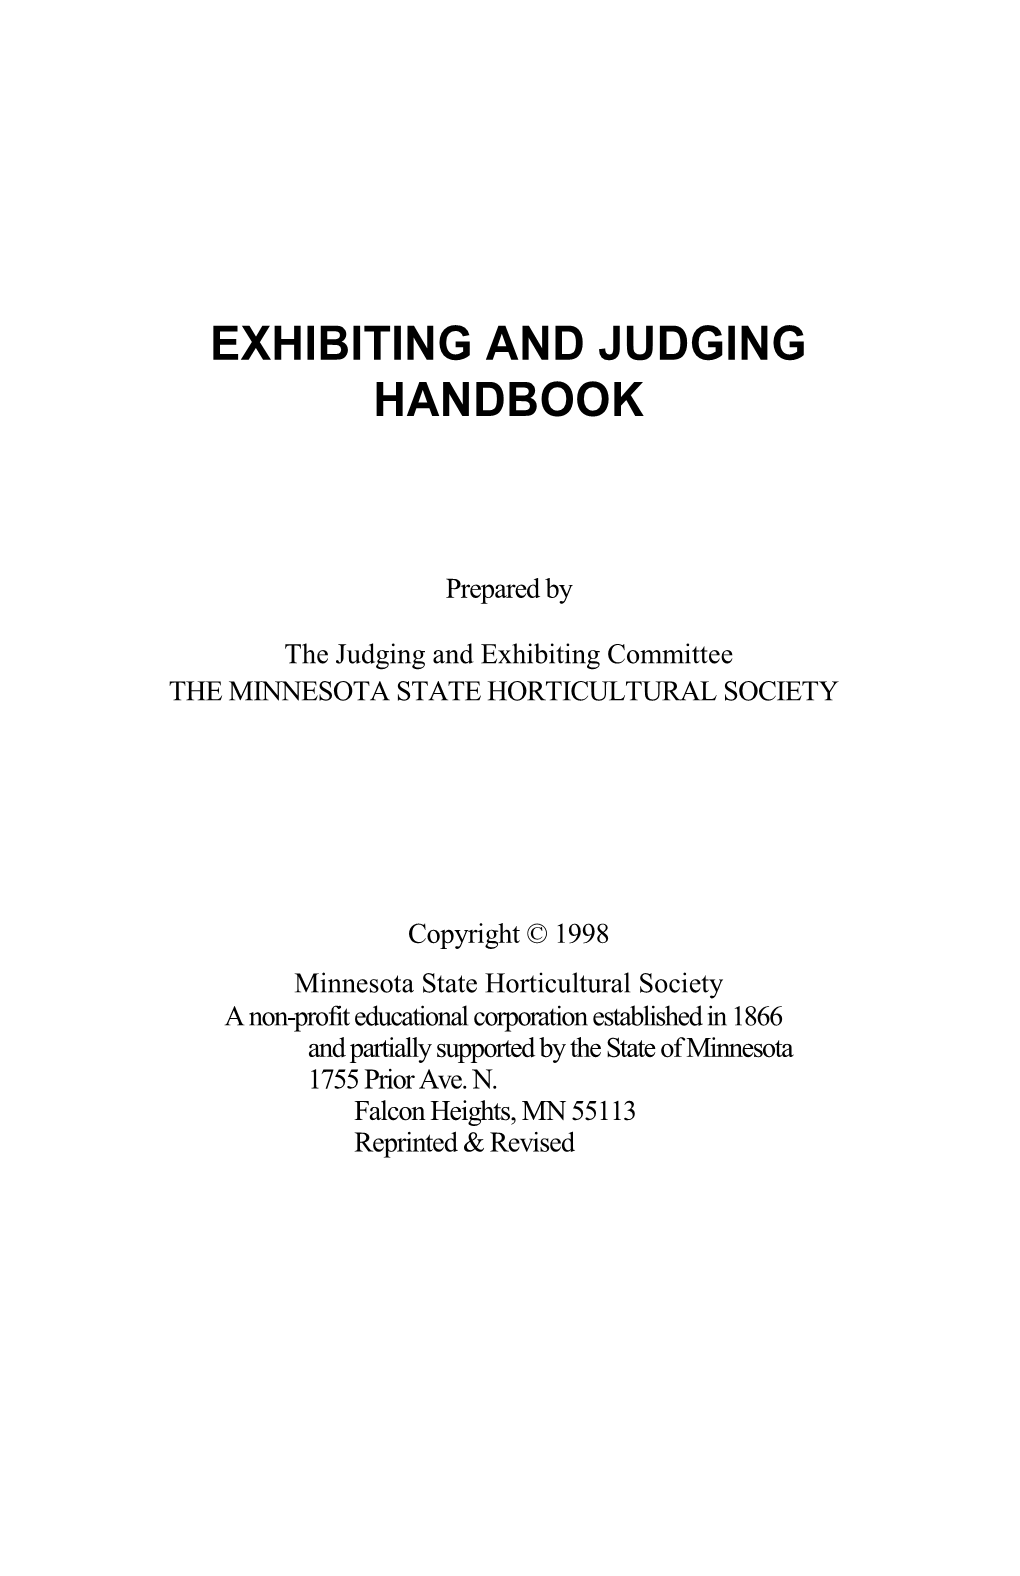 Exhibiting and Judging Handbook